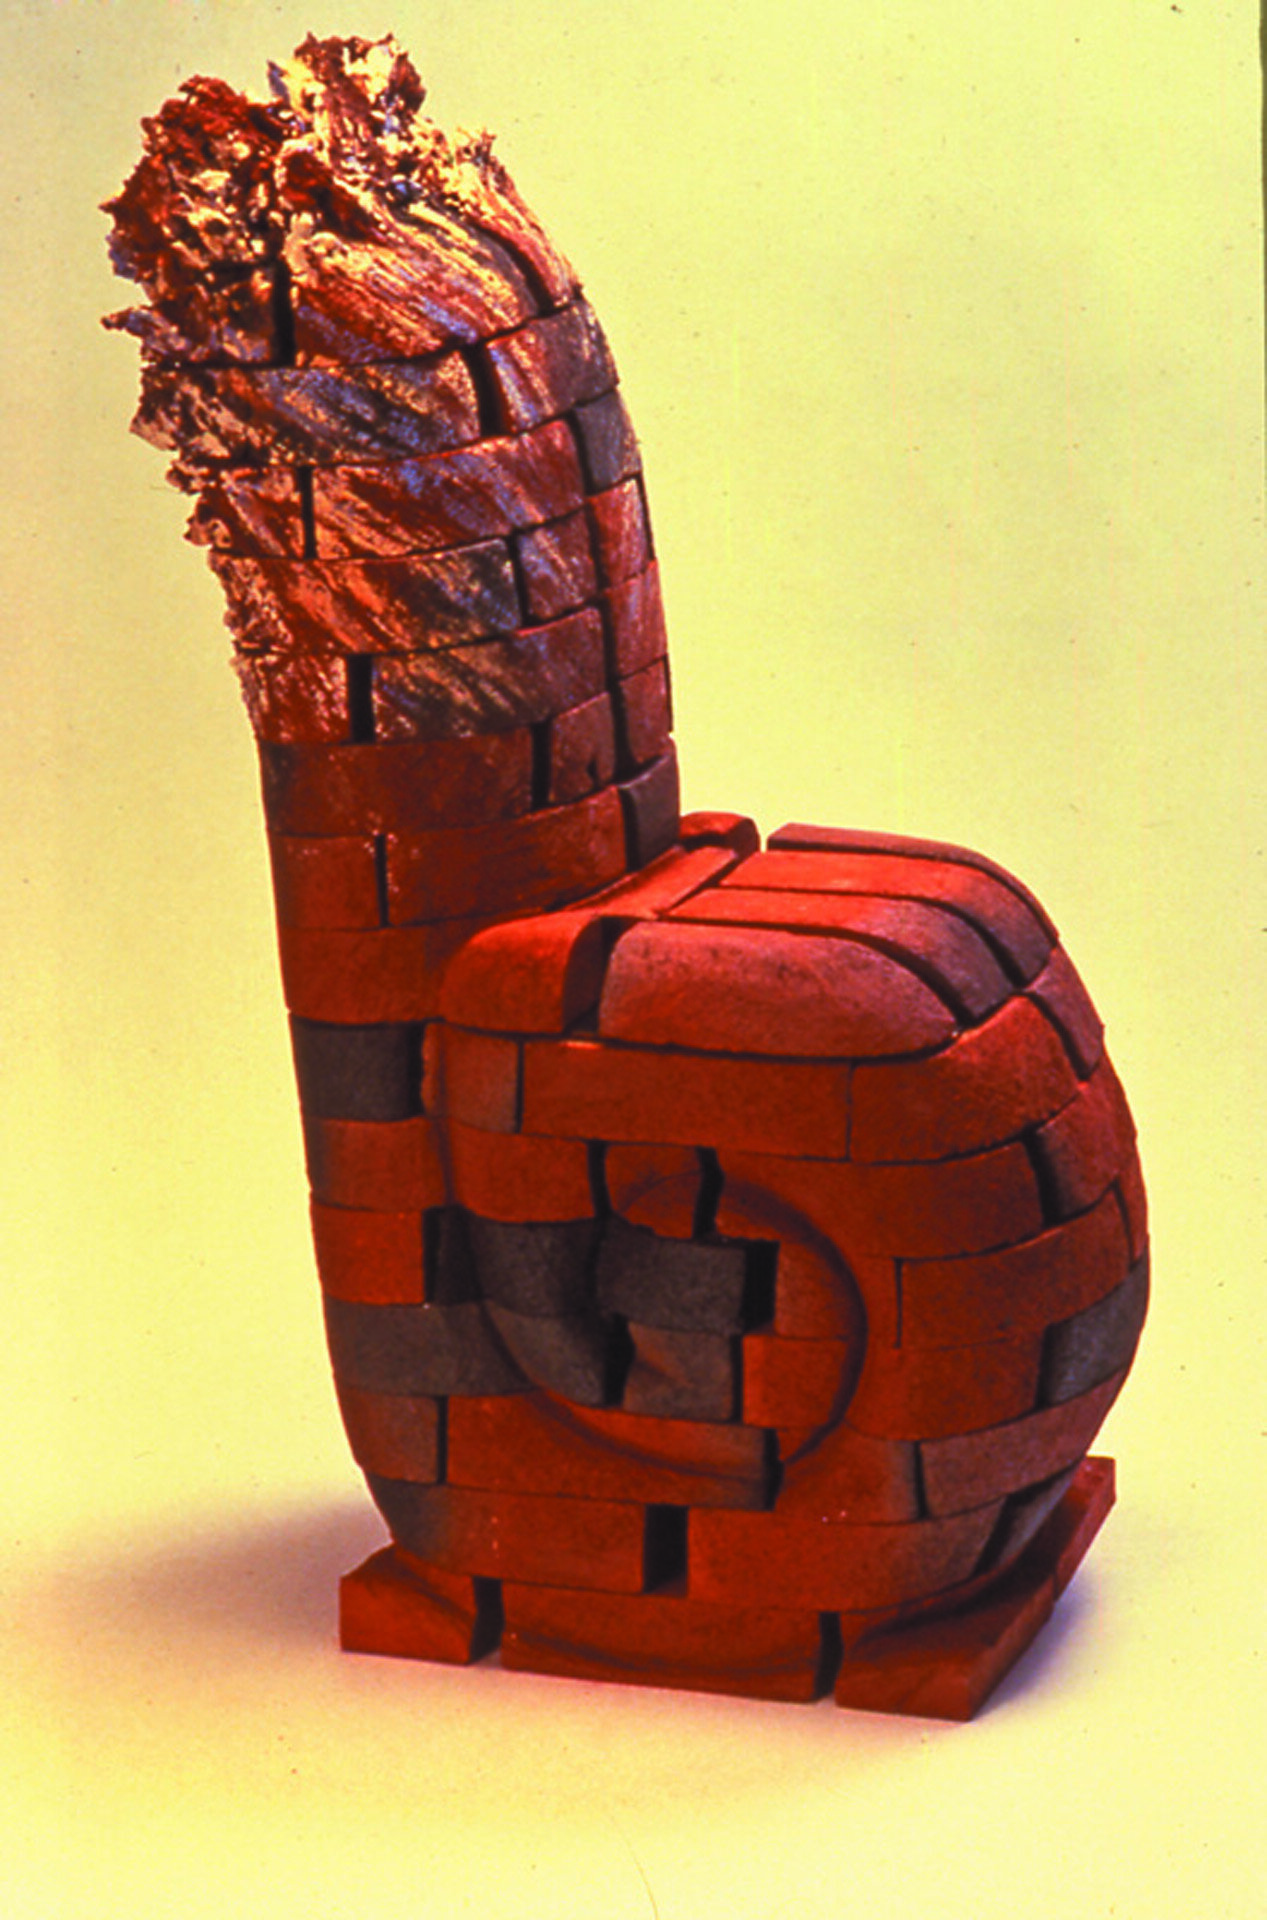 Chair-Award winning carved brick chair by Michael Morgan, brick artist